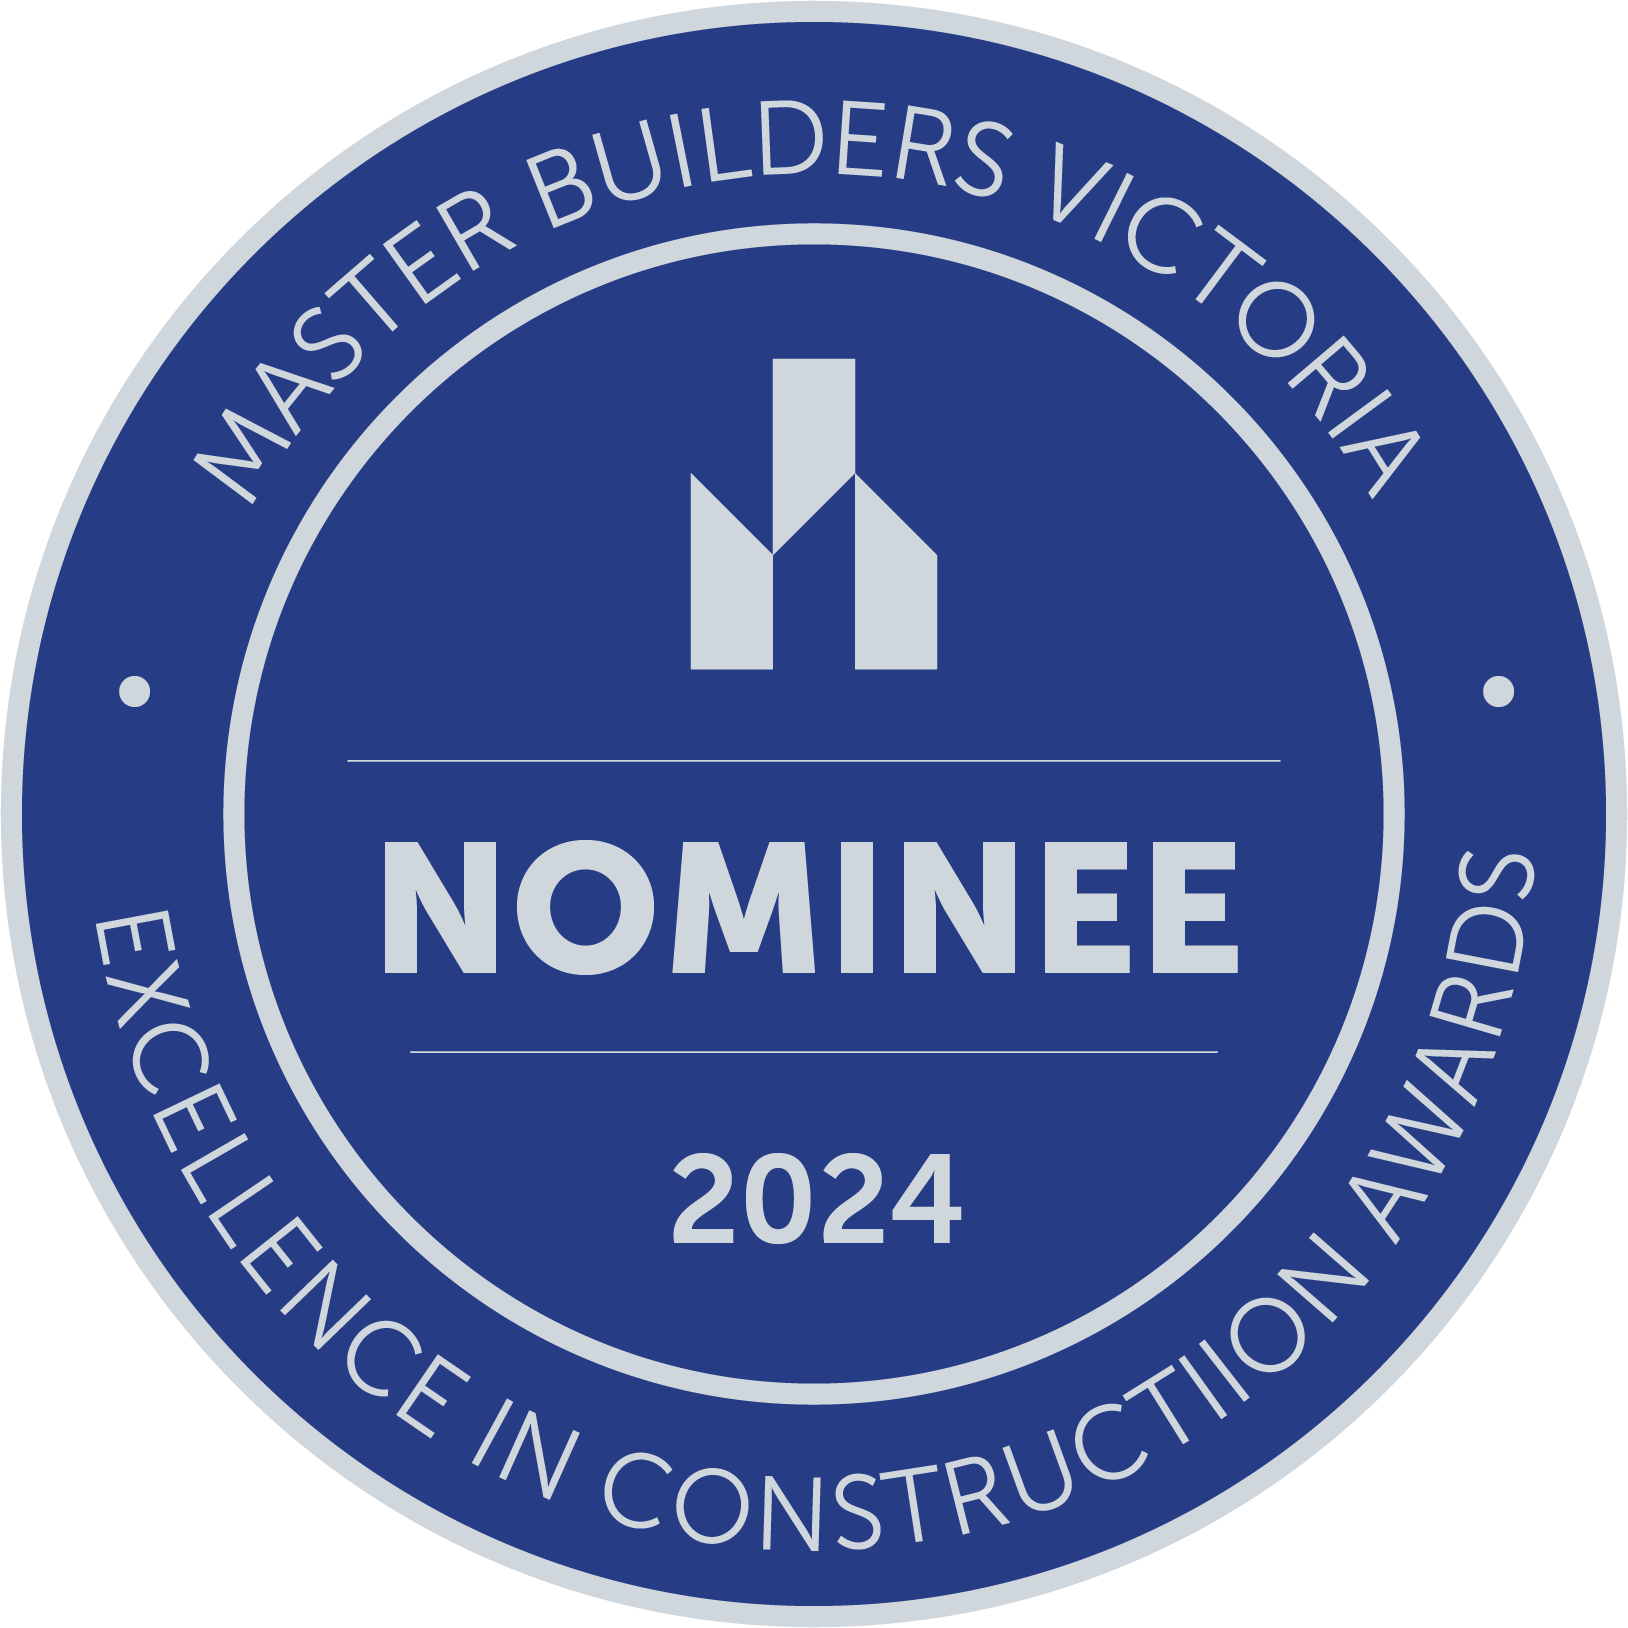 Master Builders Awards Nominee